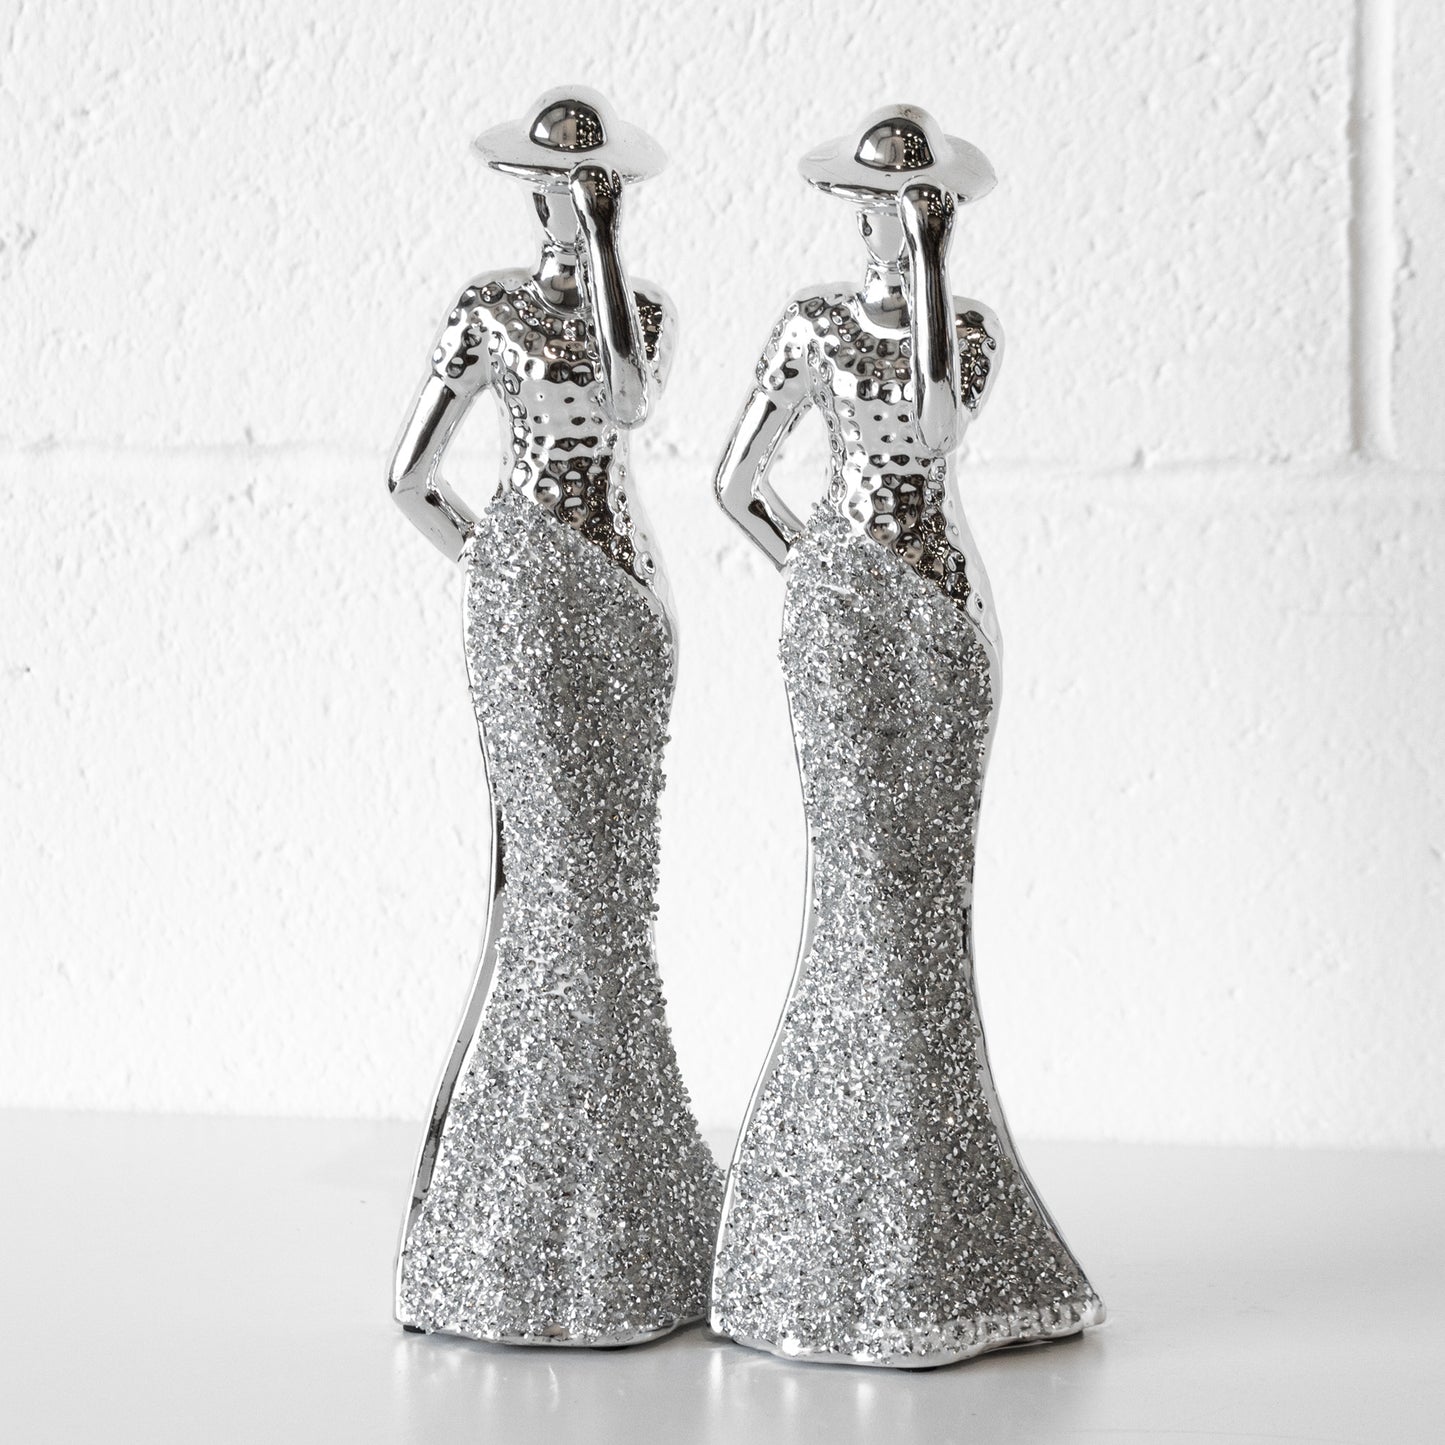 Set of 2 Silver Lady Figure Ornaments 29.5cm